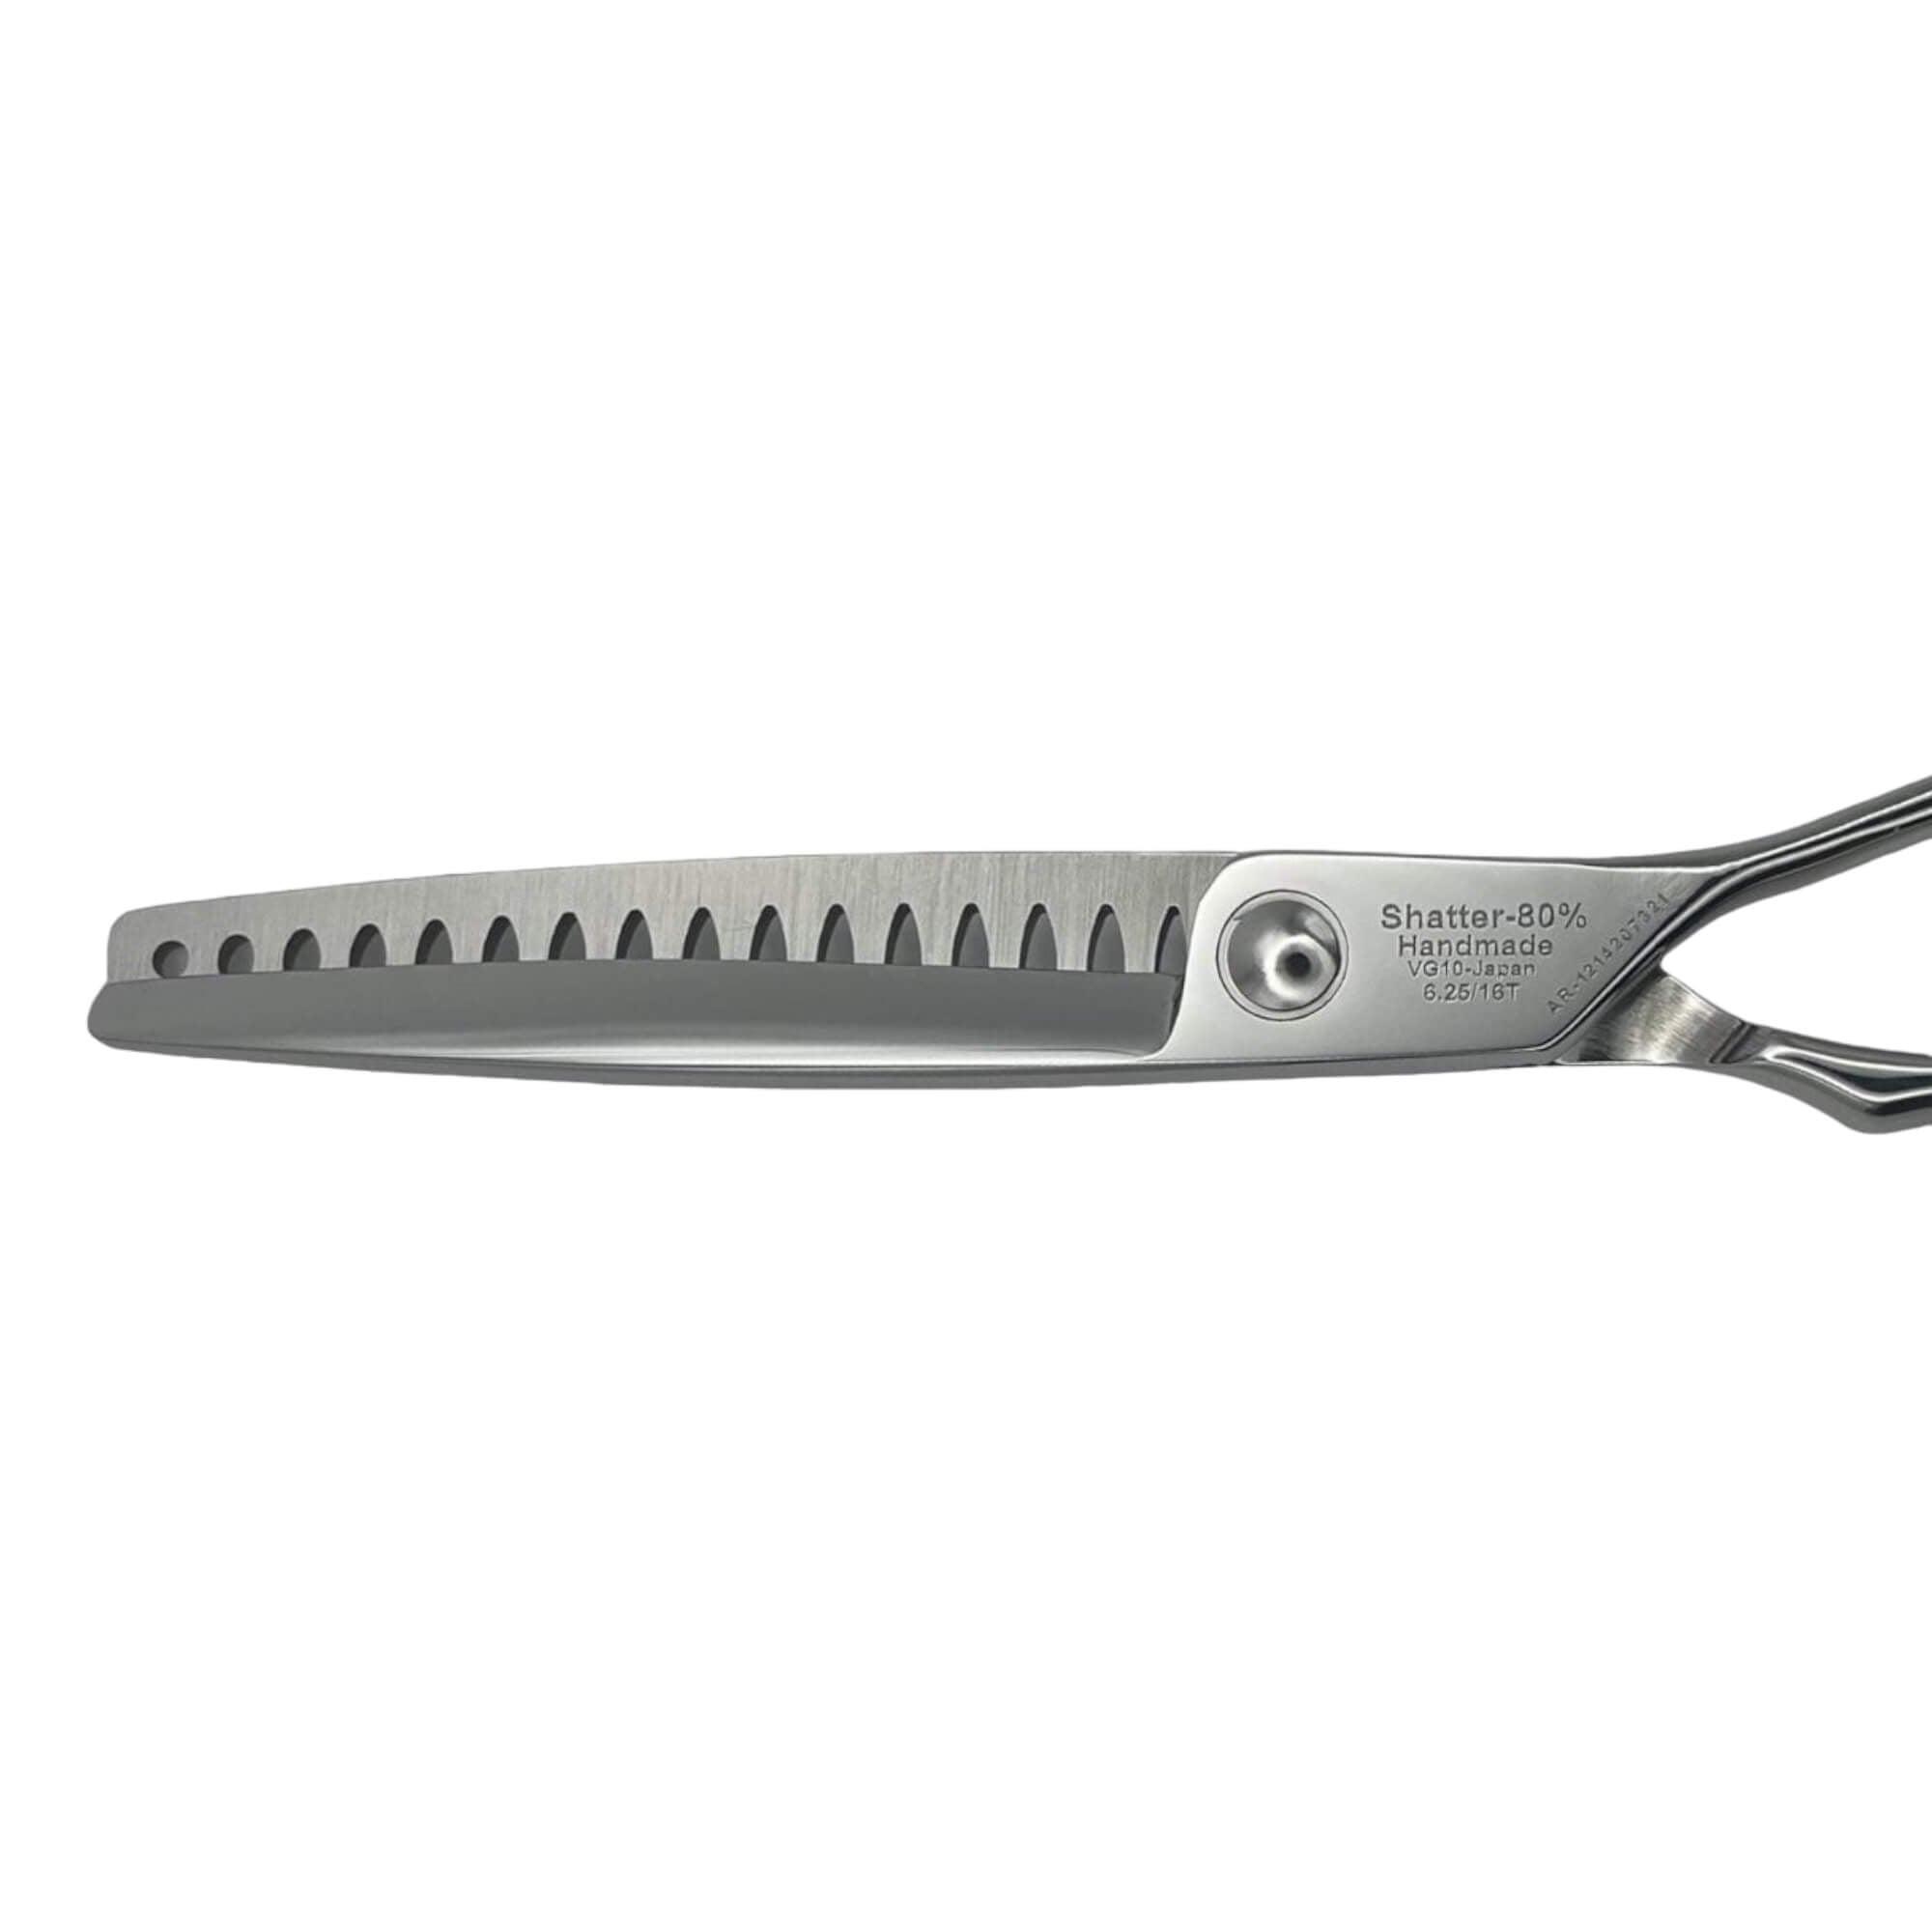 SHATTER texturising scissors back blade teeth